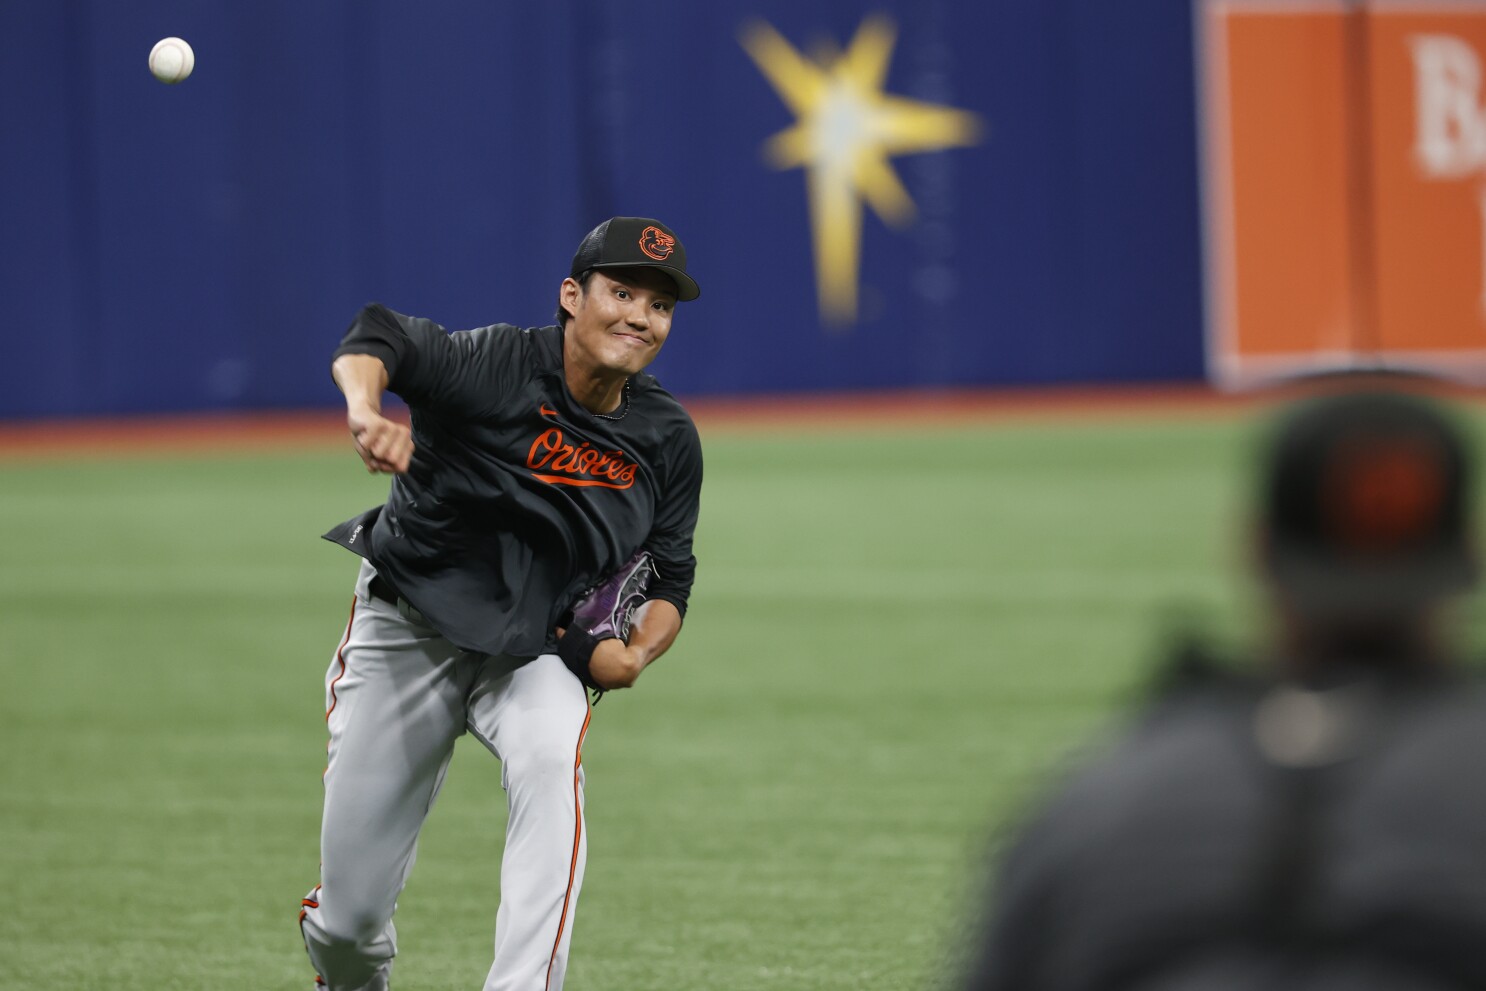 JPN@MLB: Fujinami strikes out five for Samurai Japan 